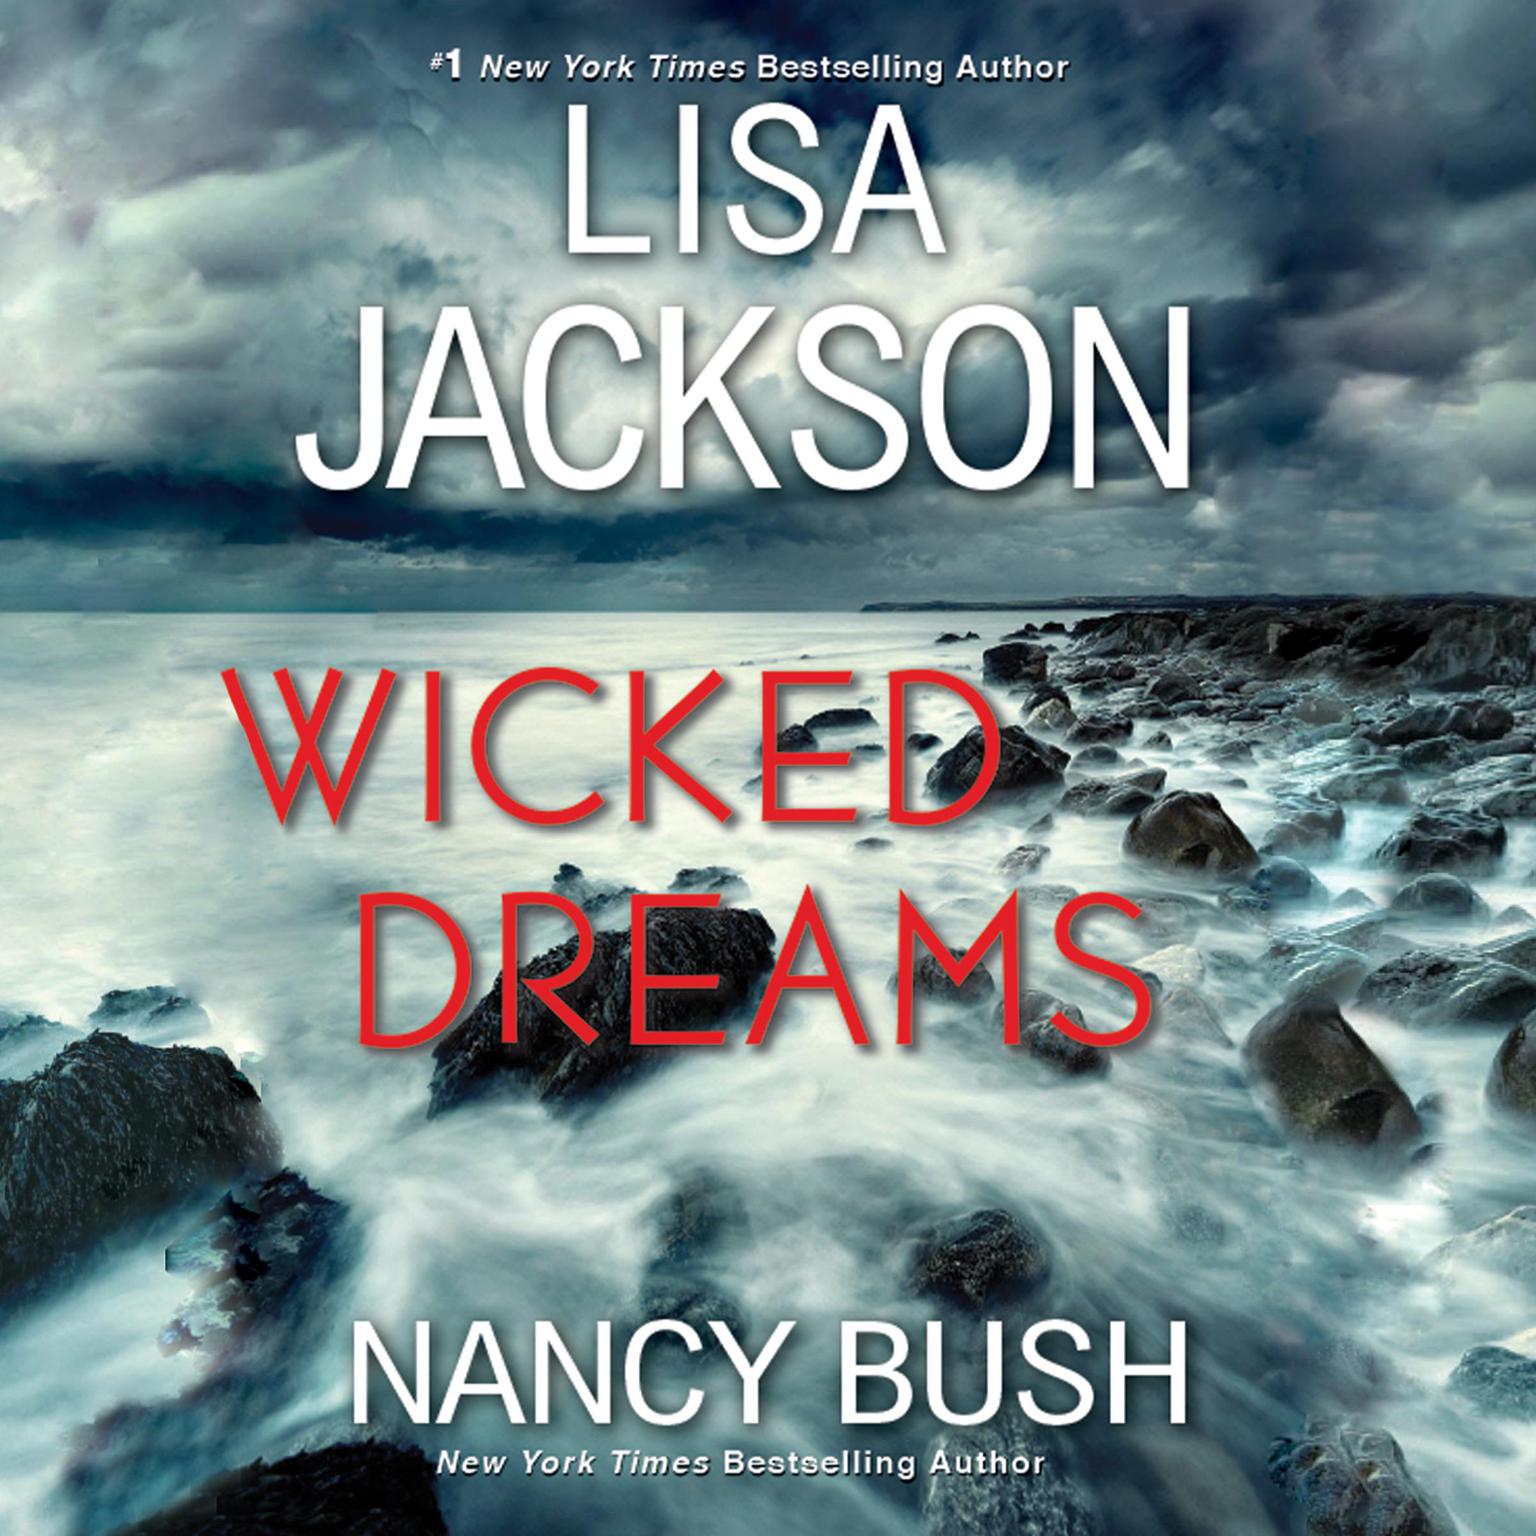 Wicked Dreams Audiobook, by Lisa Jackson